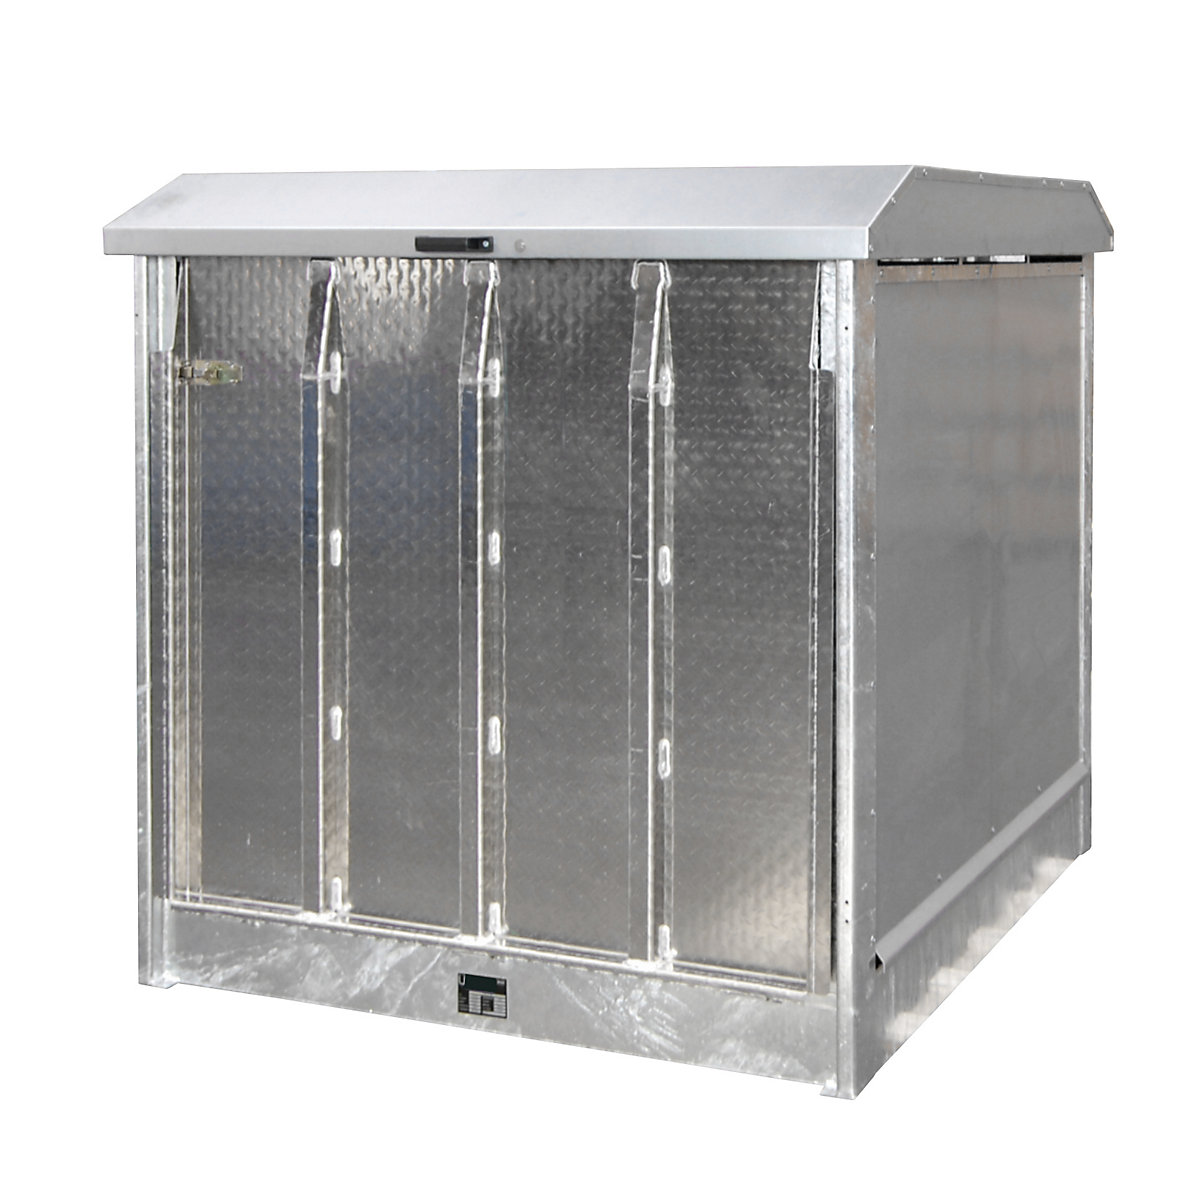 EUROKRAFTpro – Hazardous goods storage unit, with aluminium door as loading ramp, for 4 x 200 litre drums, zinc plated